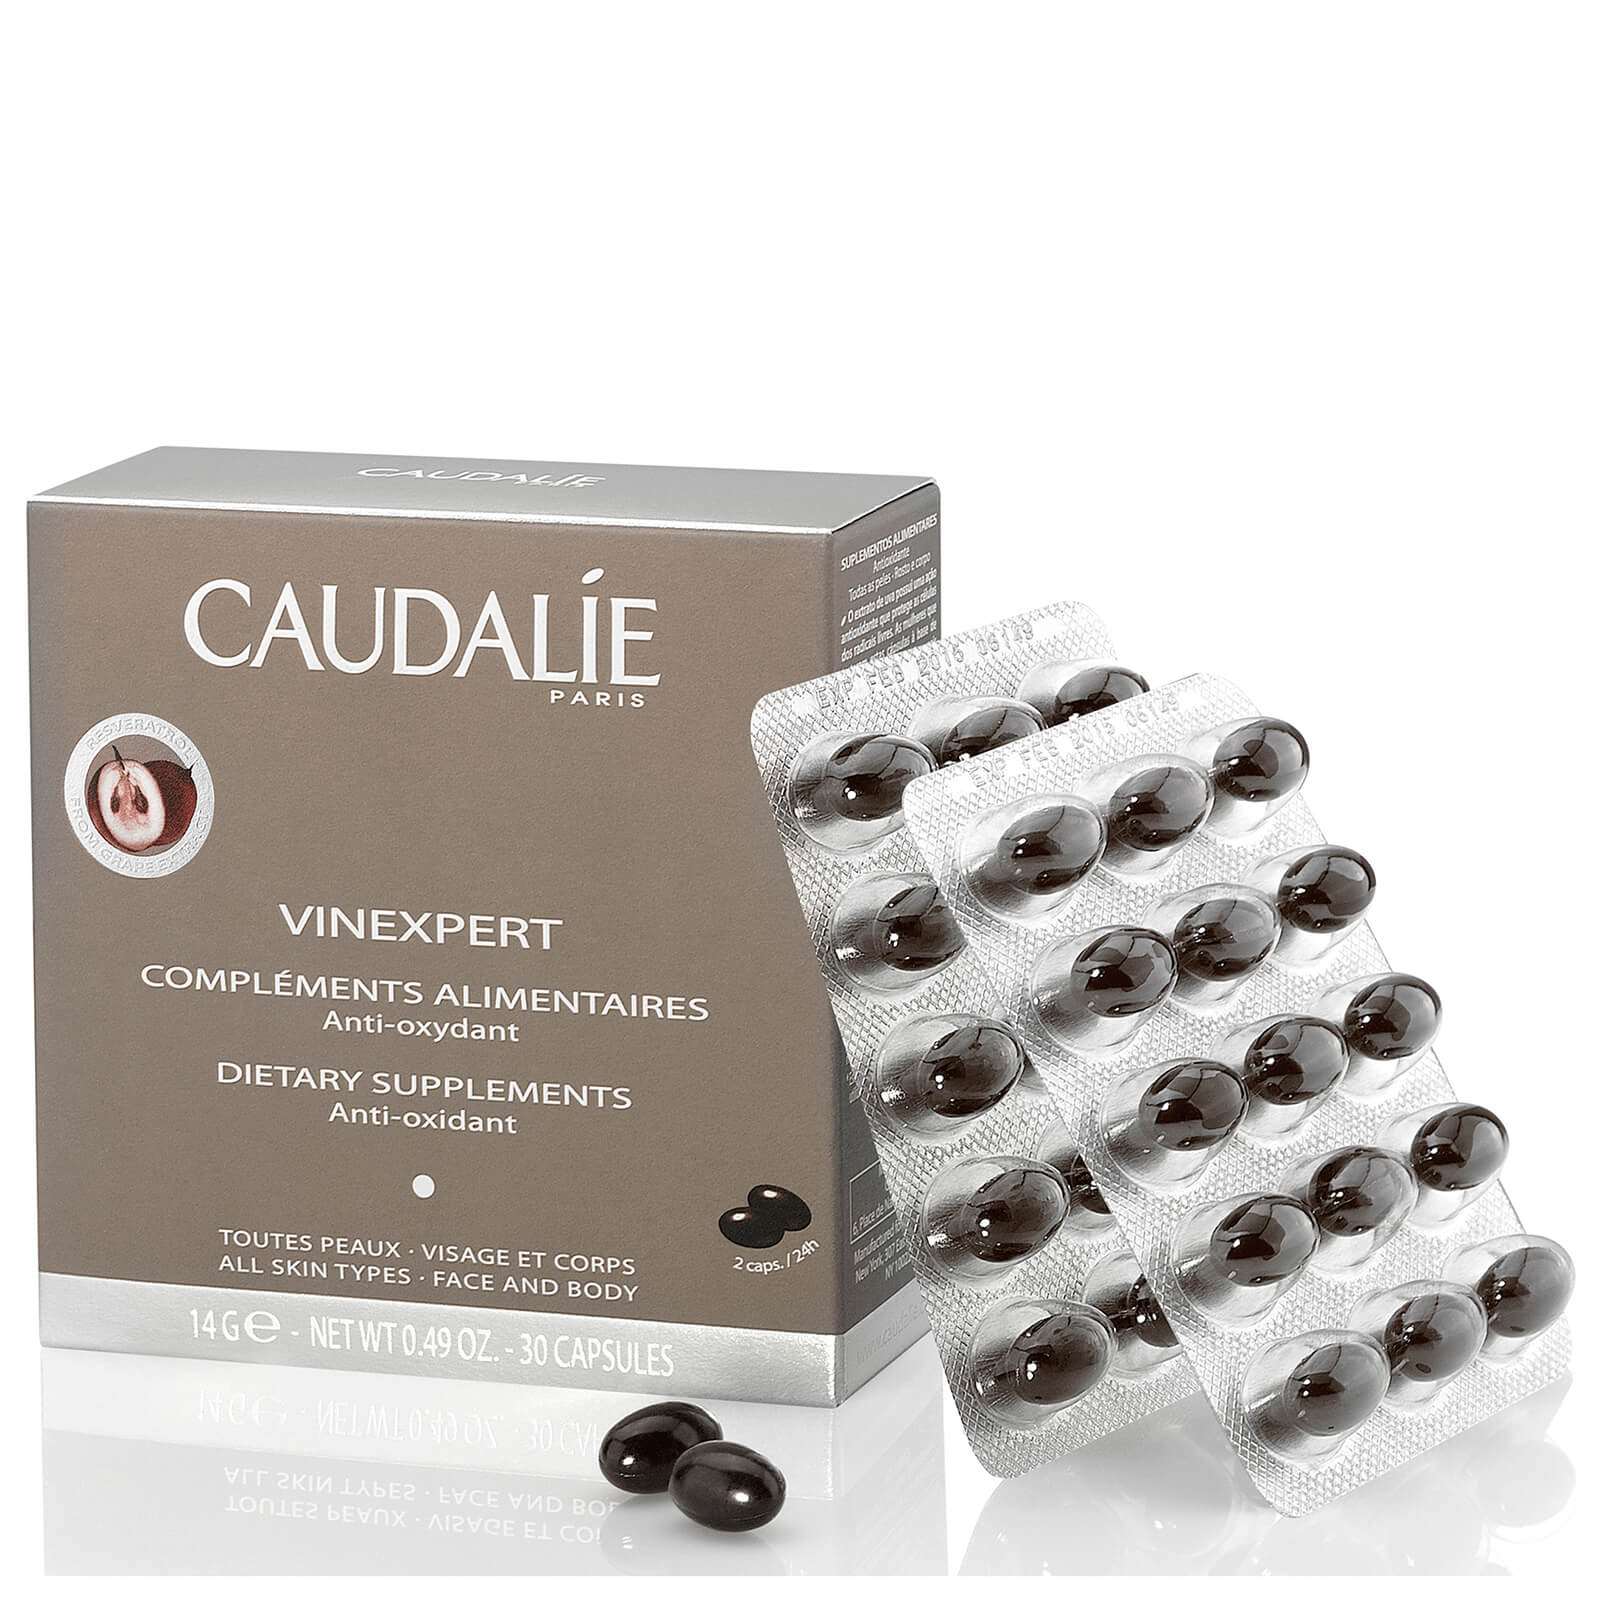 Caudalie Vinexpert Nutritional Supplements (30 Capsules)